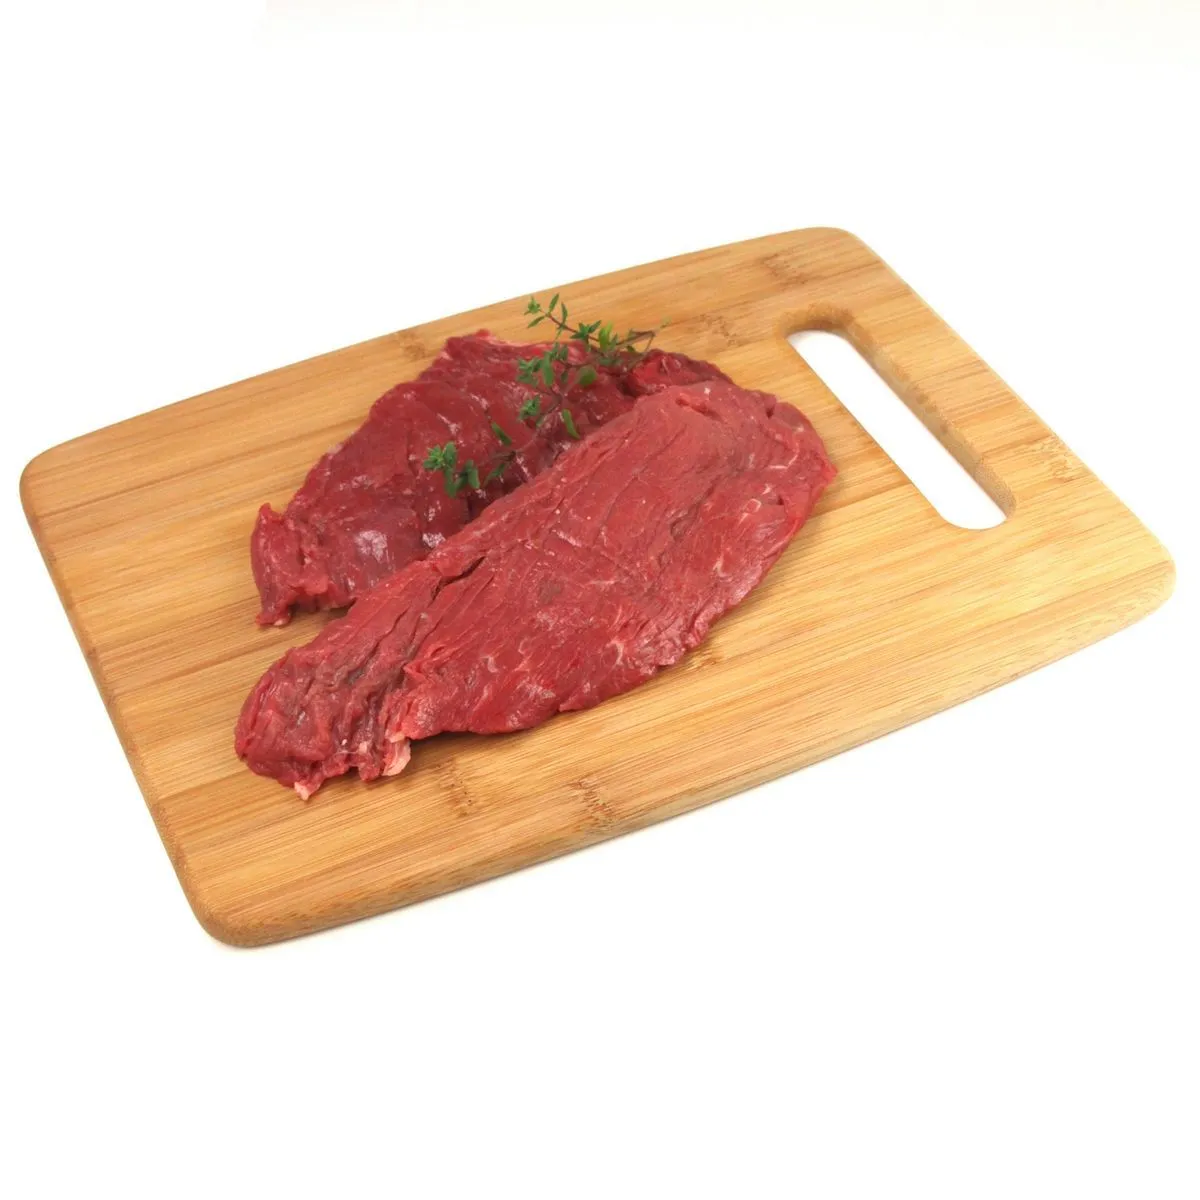 viande bovine: bavette dàloyau(1)